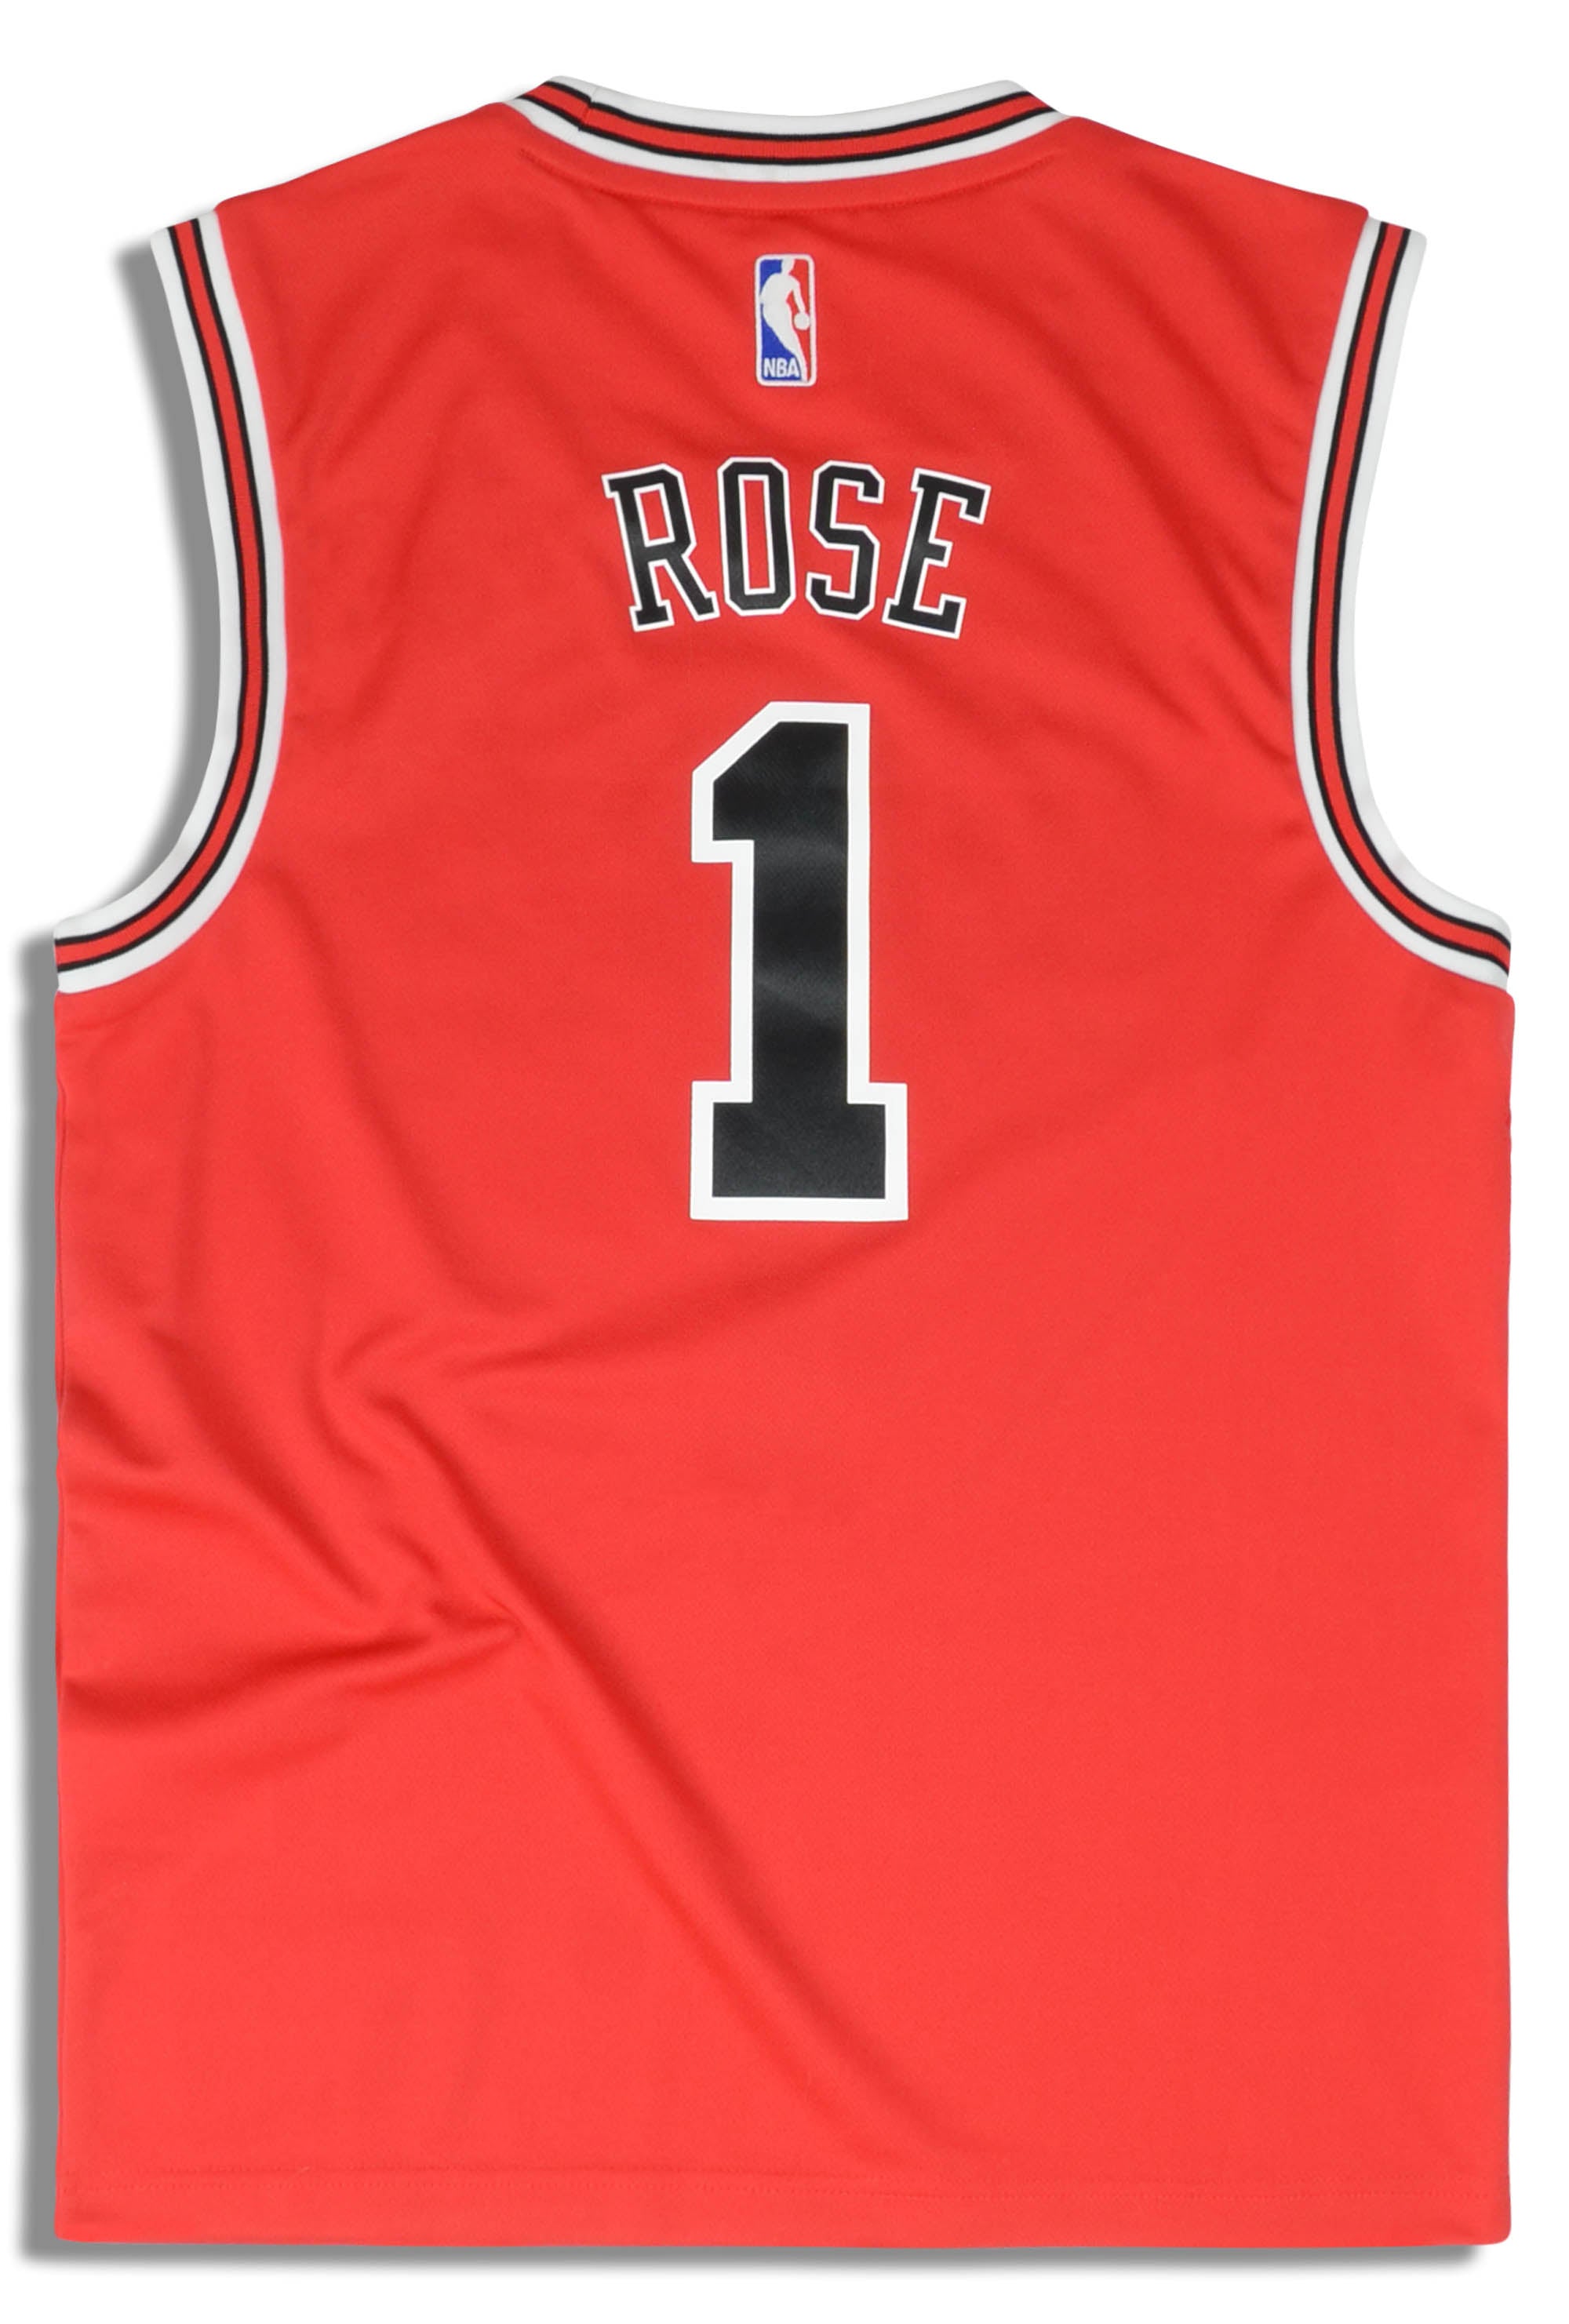 2014-16 CHICAGO BULLS ROSE #1 ADIDAS JERSEY (AWAY) L